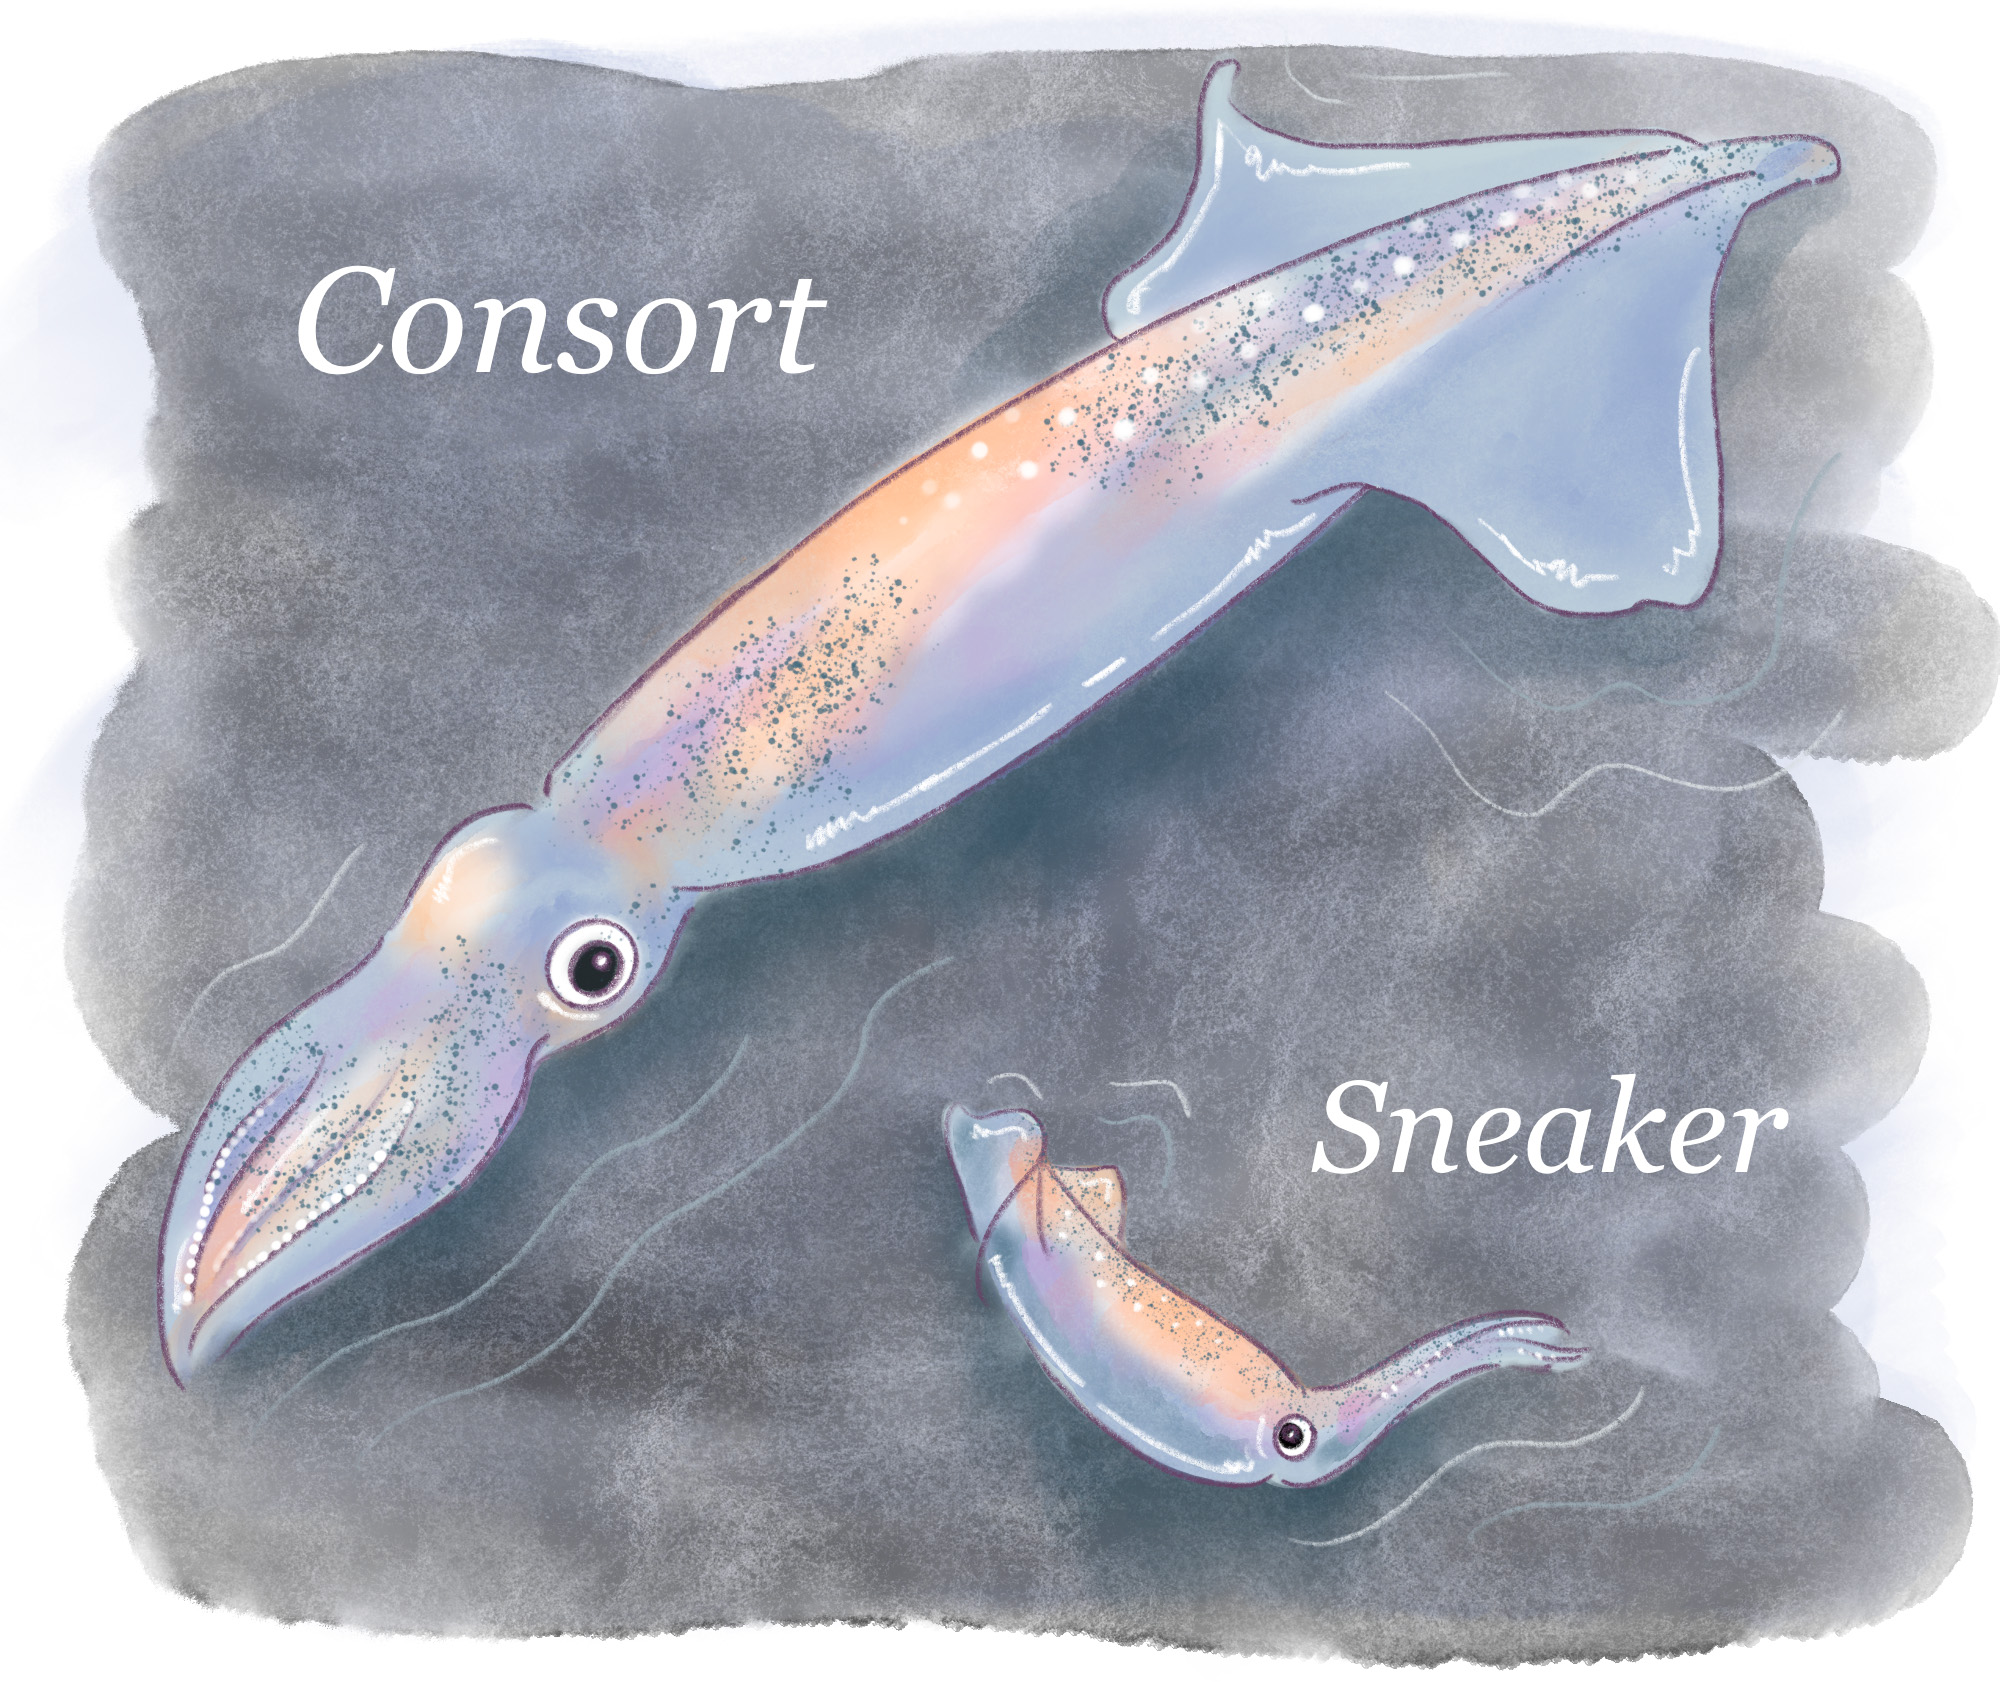 Consort-and-Sneaker-Squid.jpg